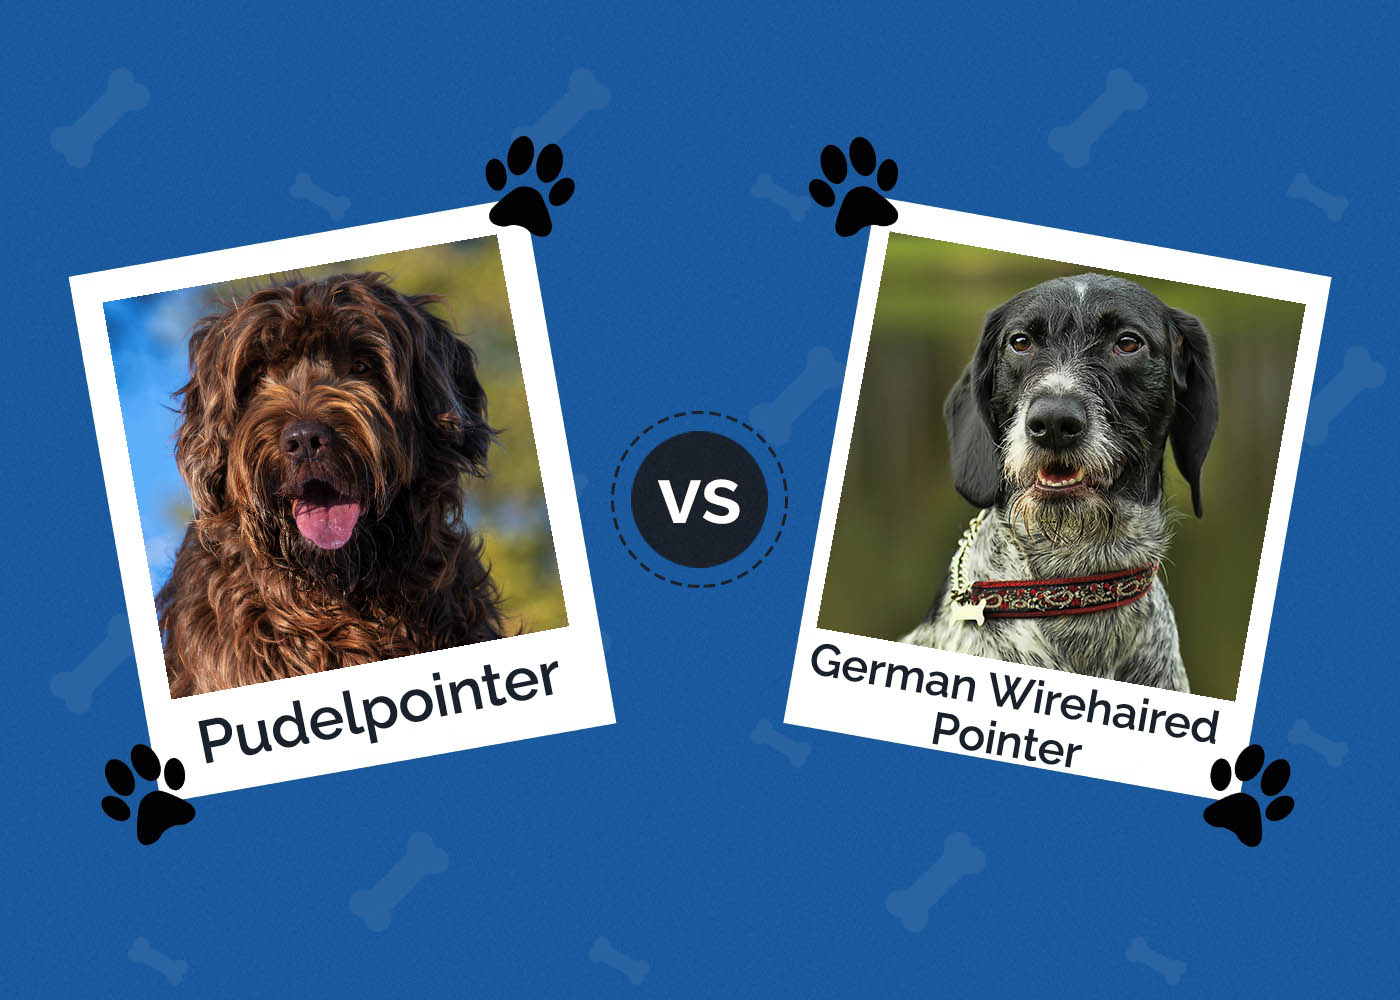 Pudelpointer vs German Wirehaired Pointer